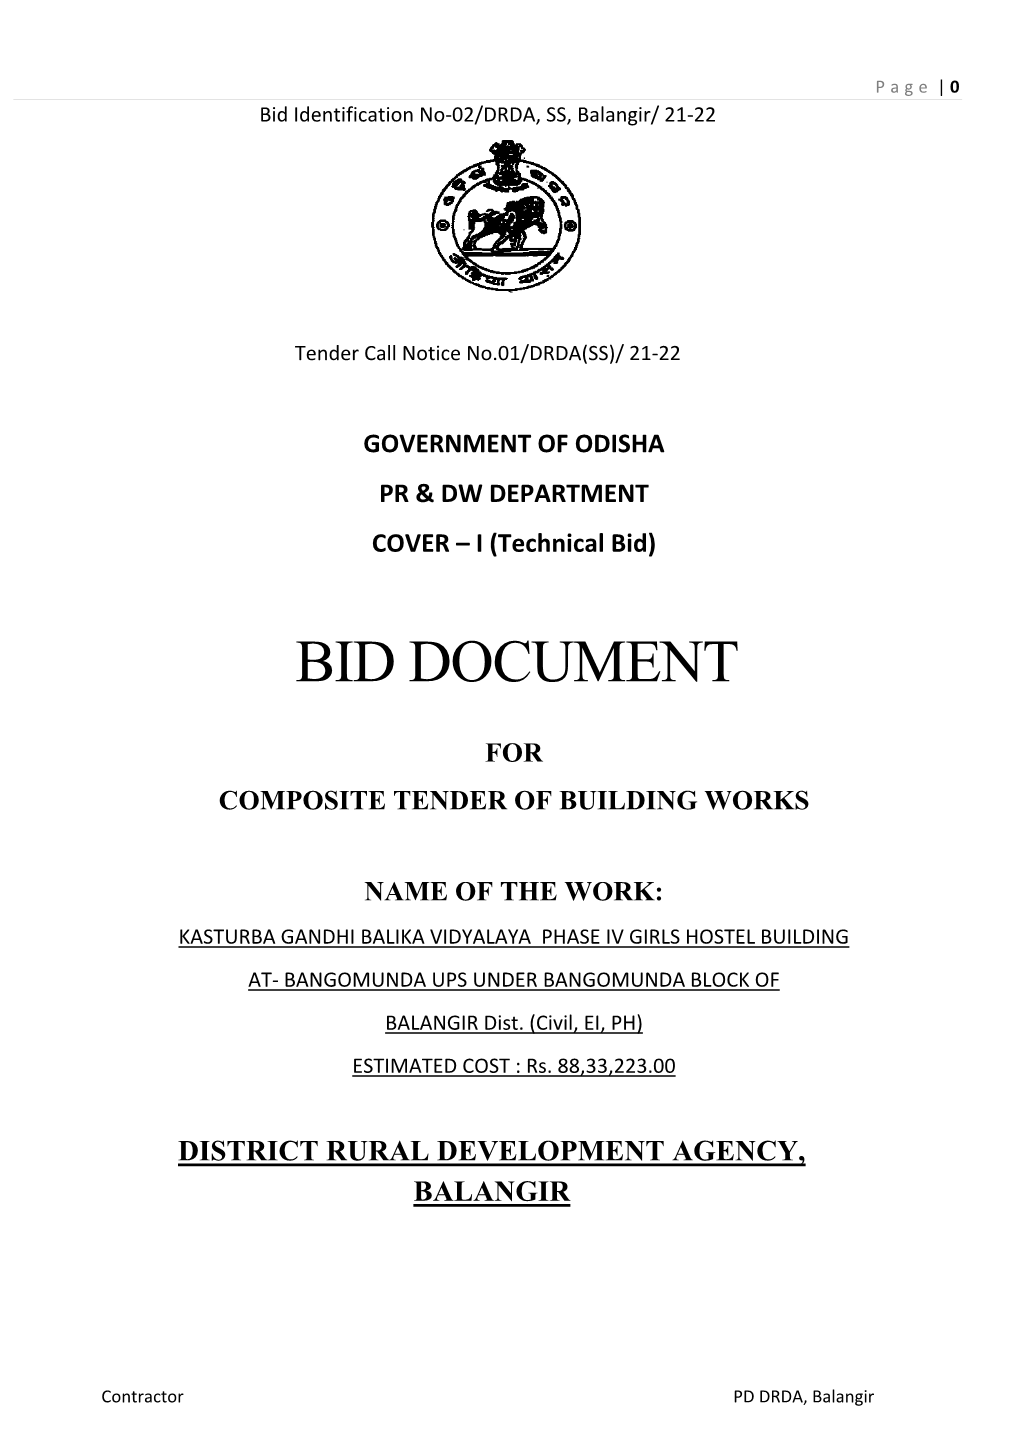 Bid Document